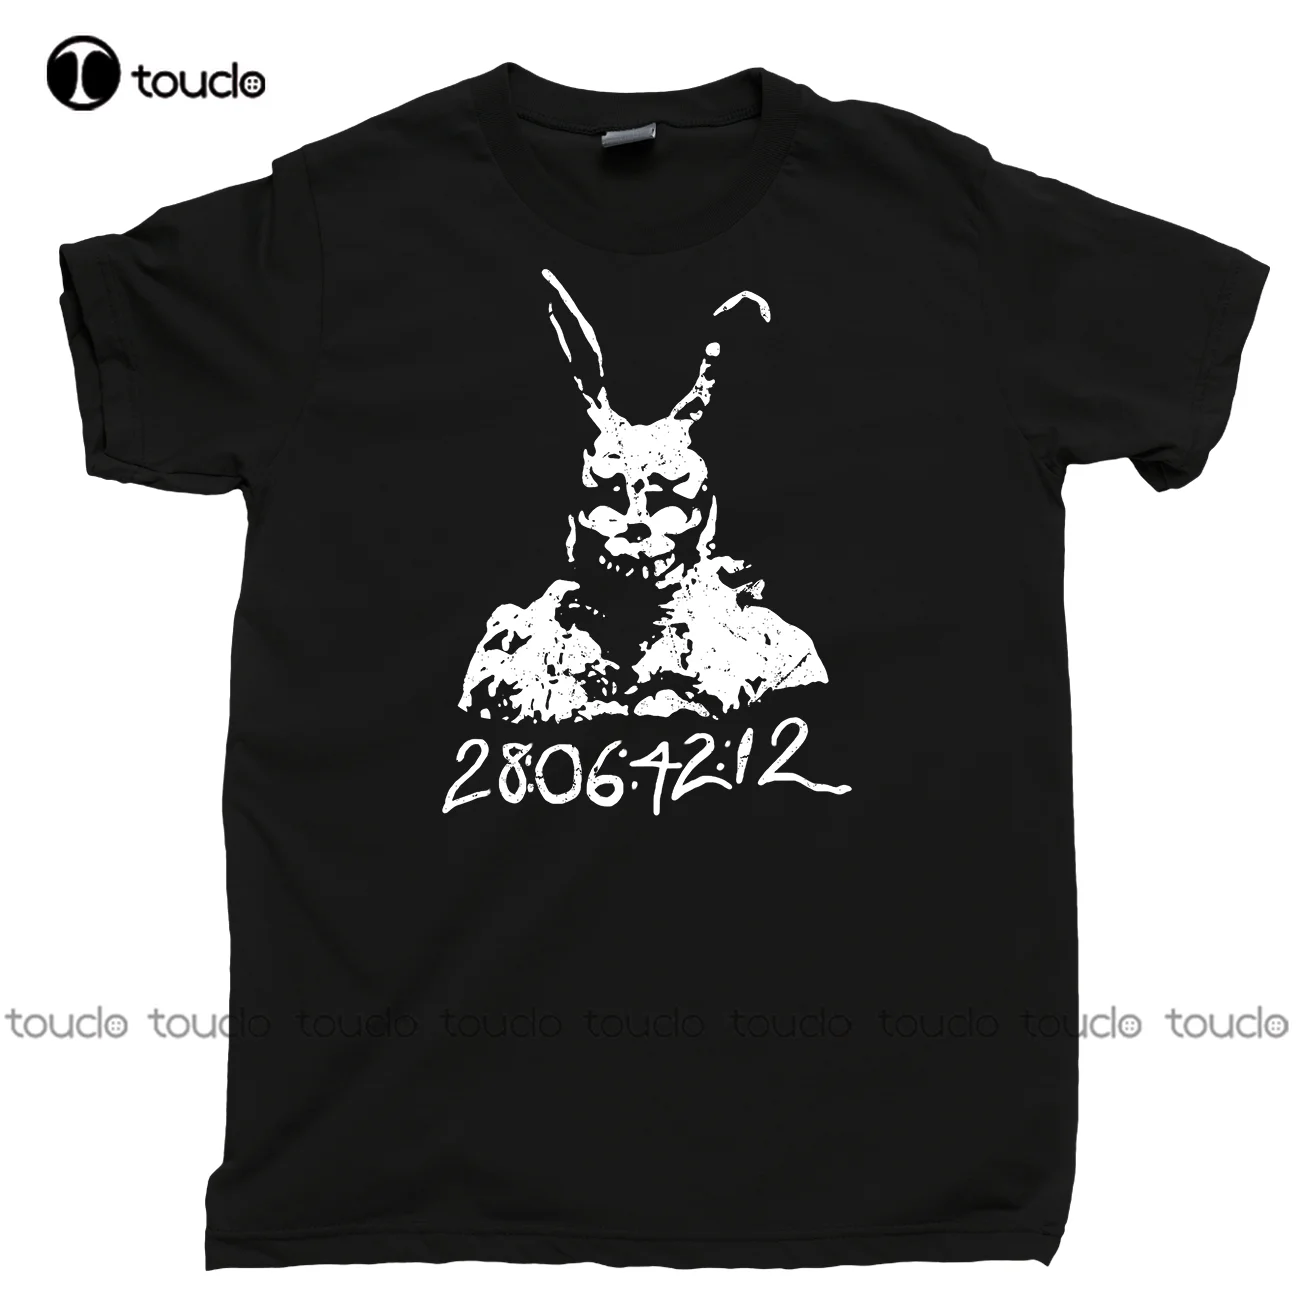 

Donnie Darko T Shirt 28 06 42 12 Frank Bunny Rabbit Suit Time Travel Movie Tee t shirt dress Custom aldult Teen unisex xs-5xl